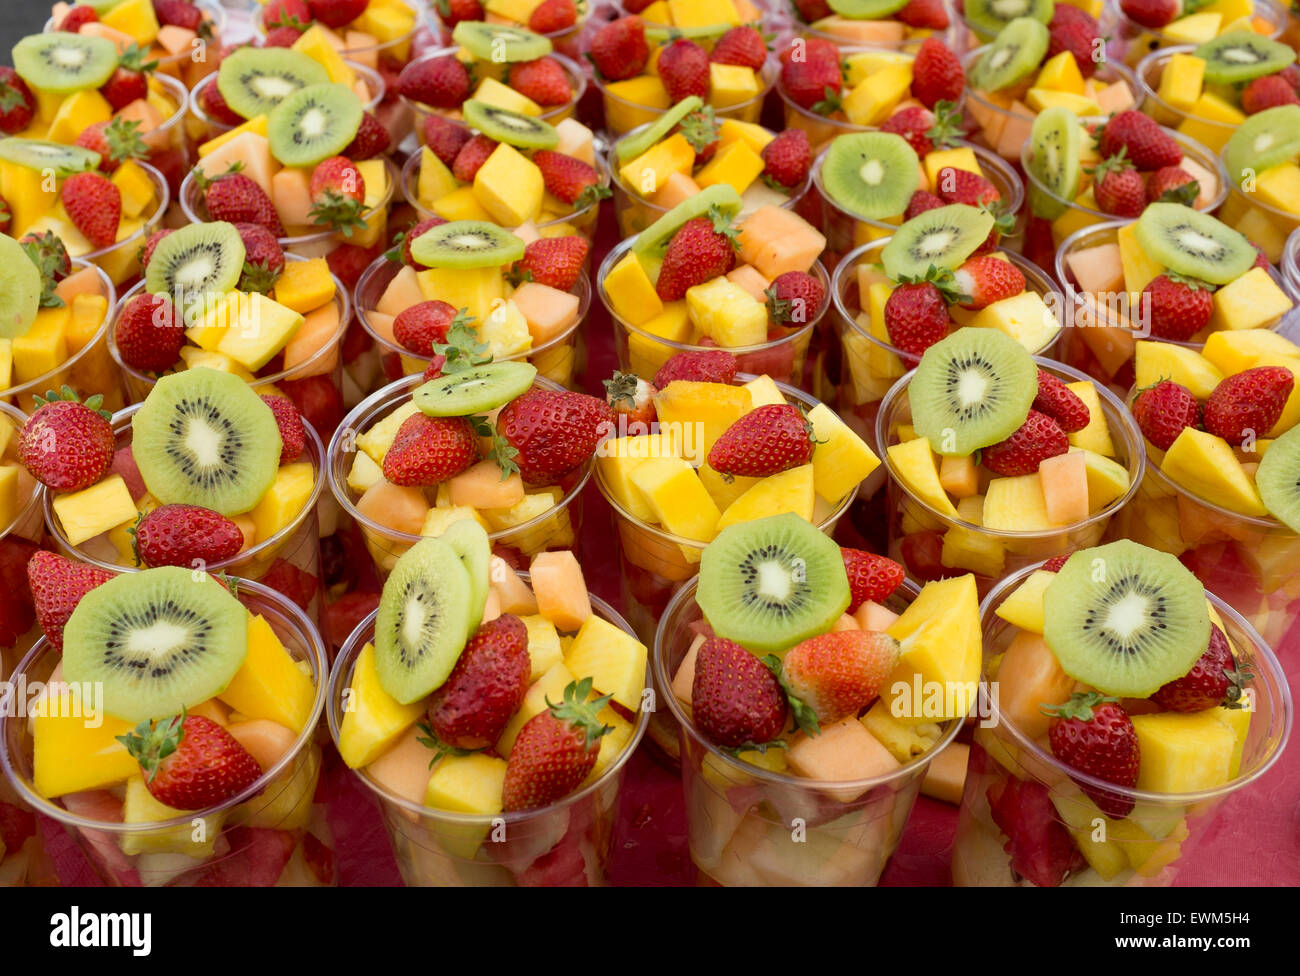 Cócteles frutas fotografías e imágenes de alta resolución - Alamy